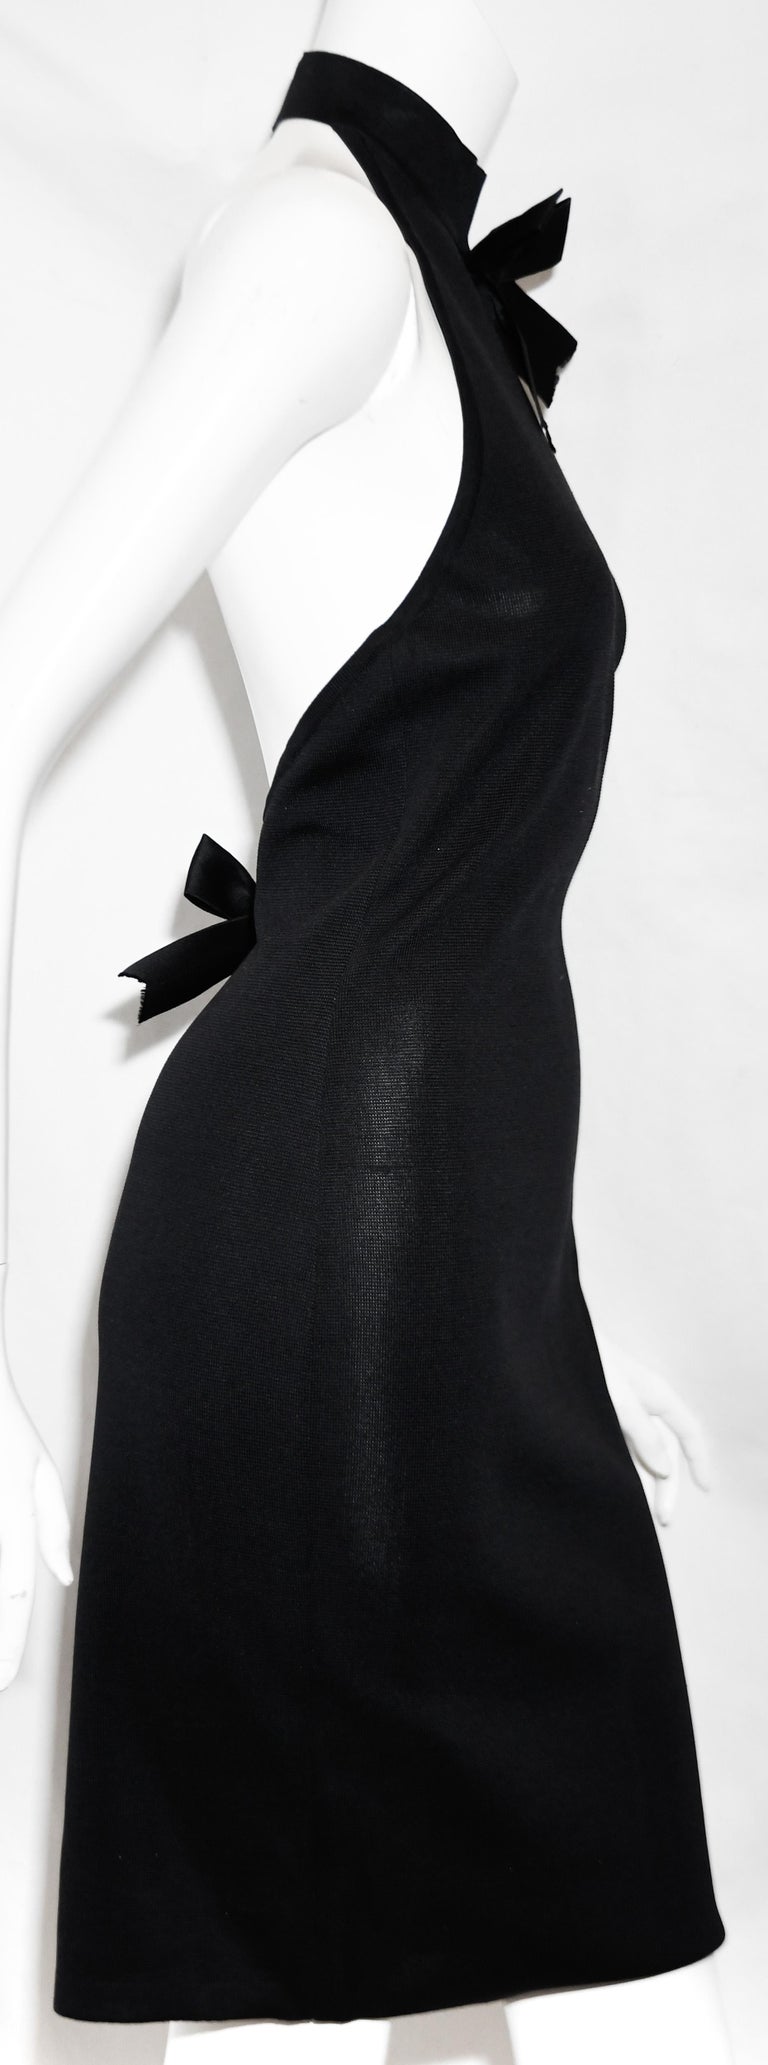 Chanel Black Bow Dress